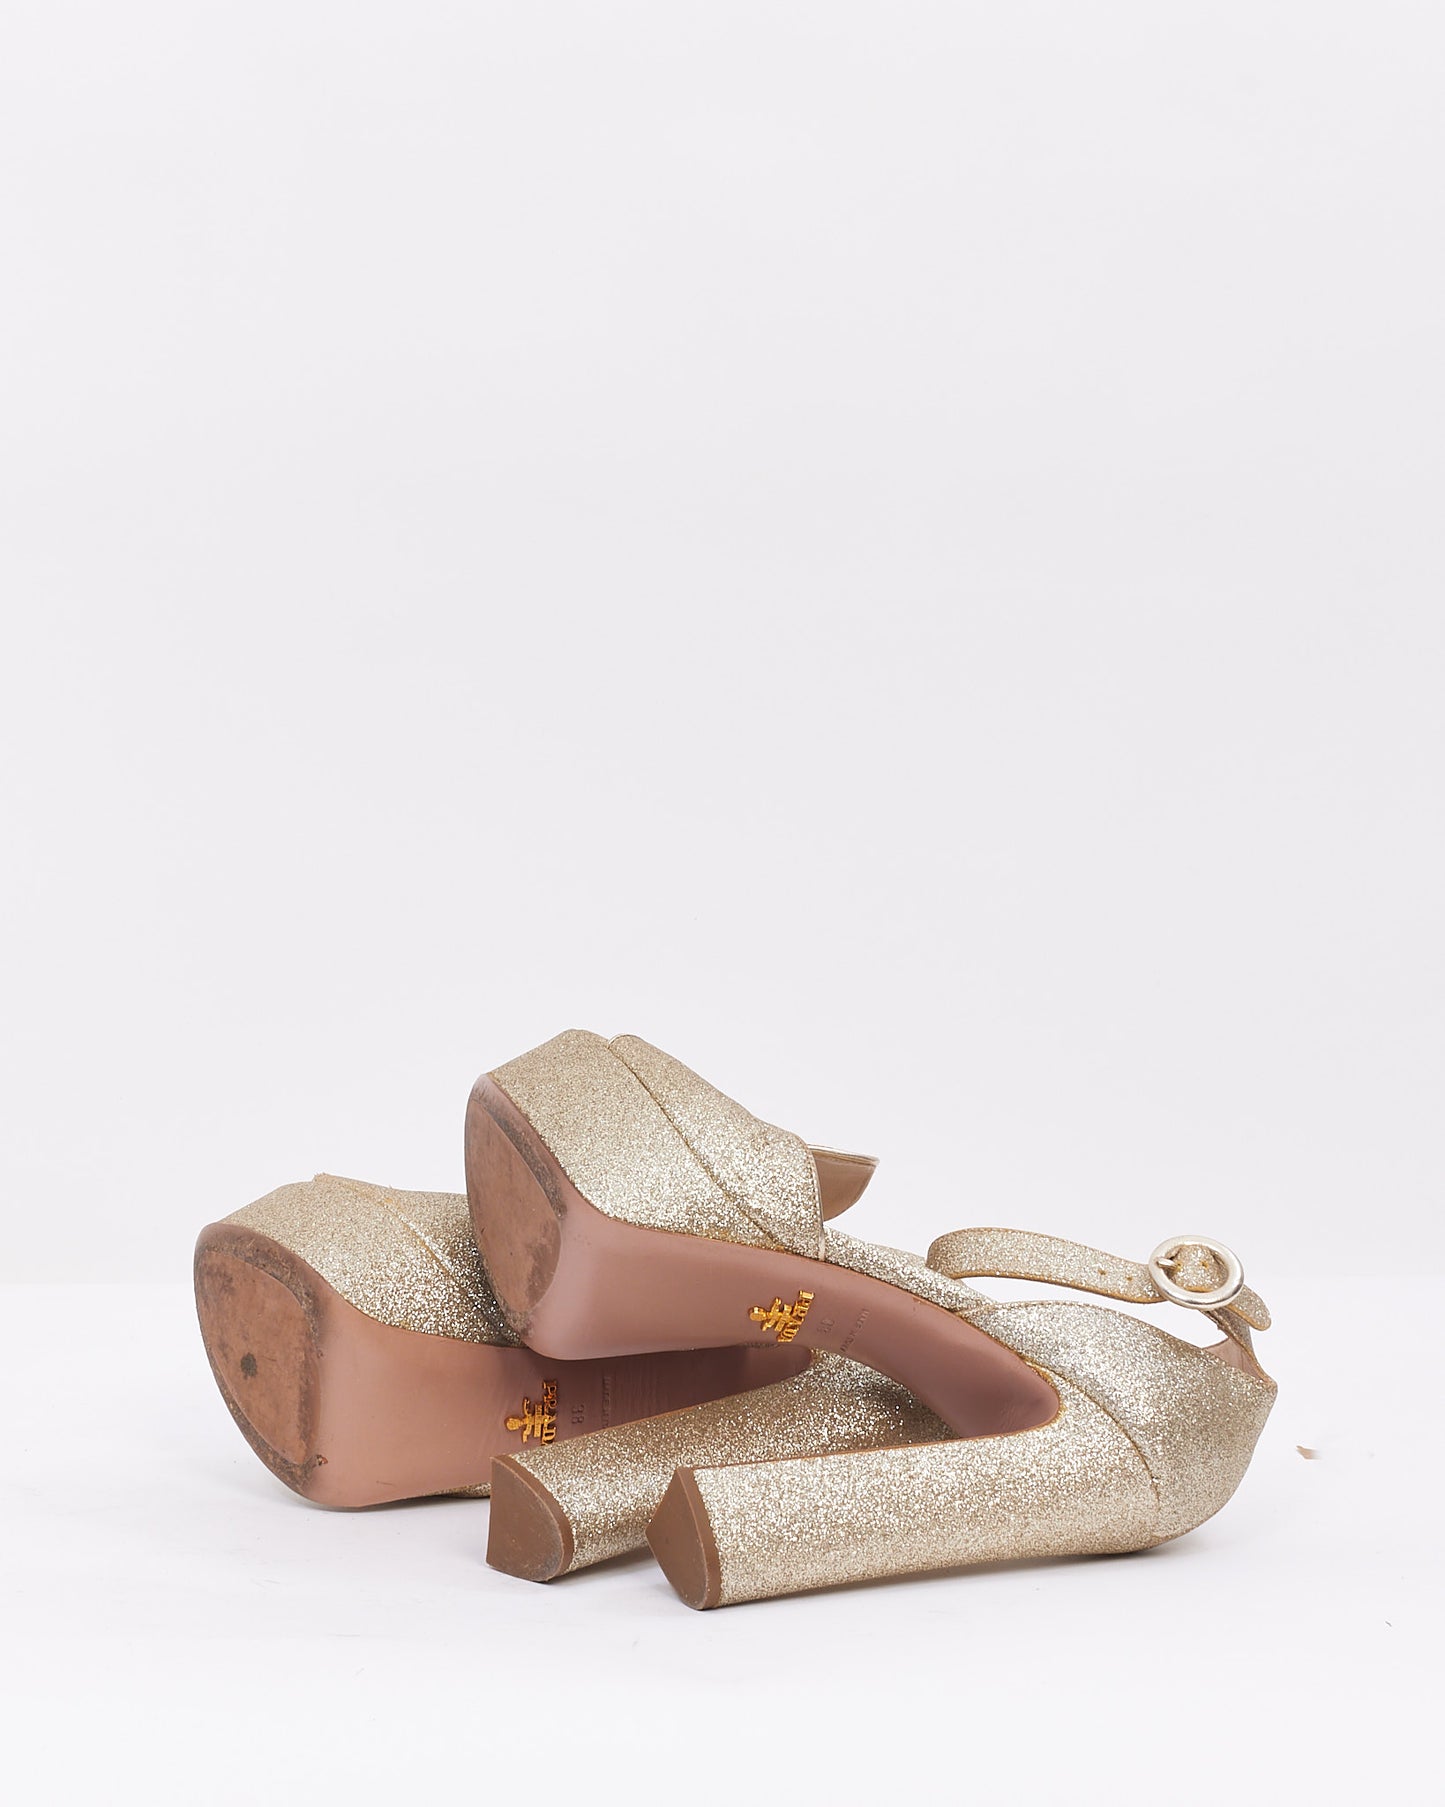 Prada Gold Glitter Platform Ankle Wrap Heels - 38